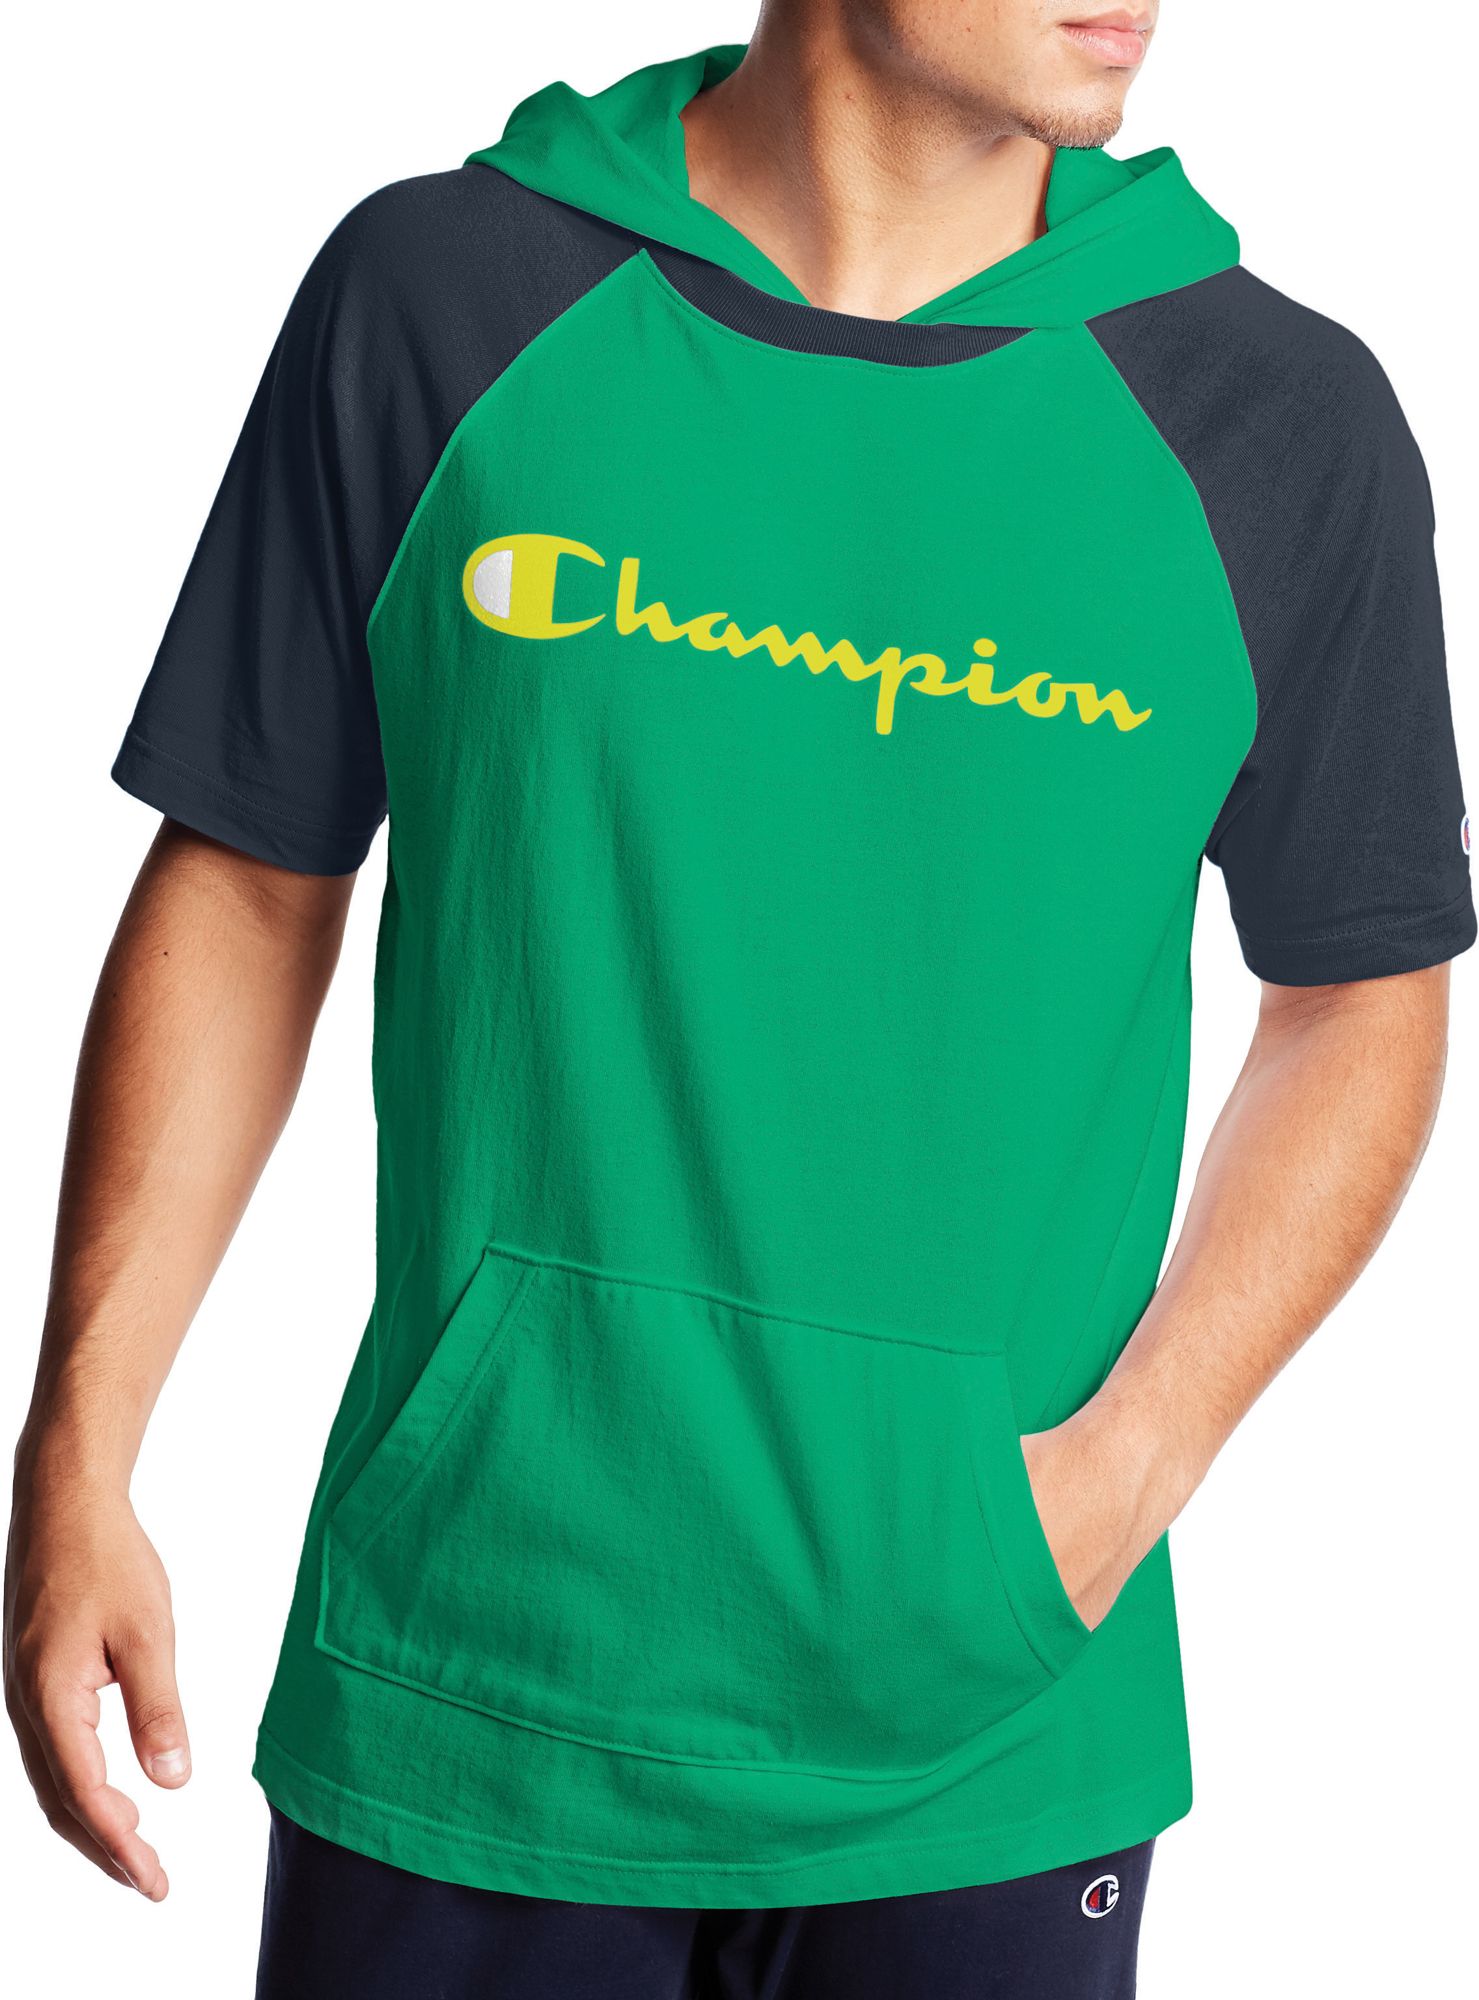 champion short sleeve hoodie